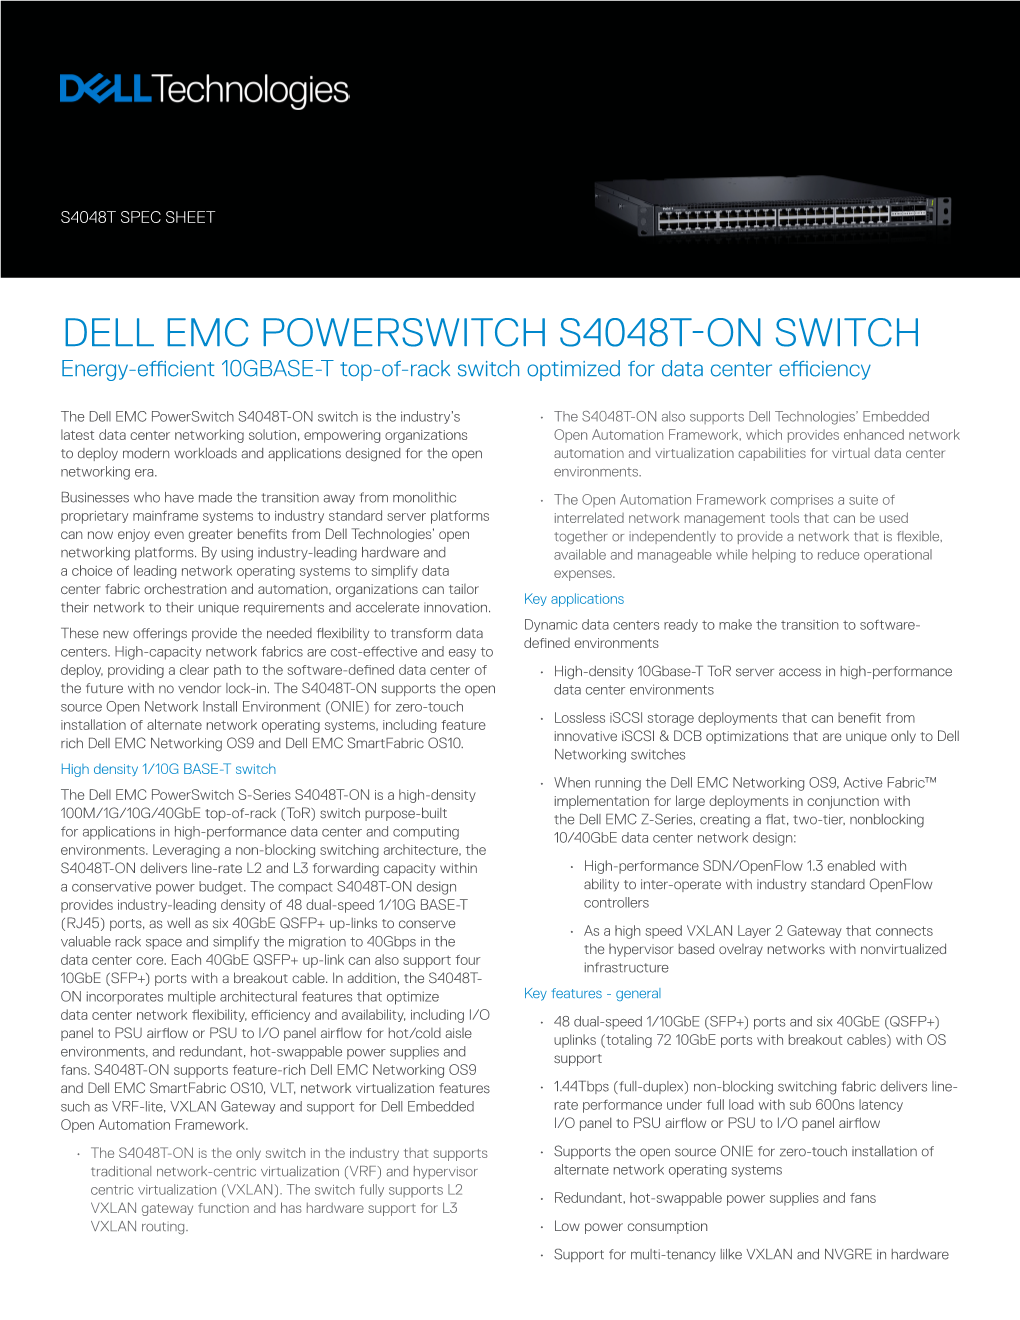 Dell EMC Powerswitch S4048T-ON Spec Sheet